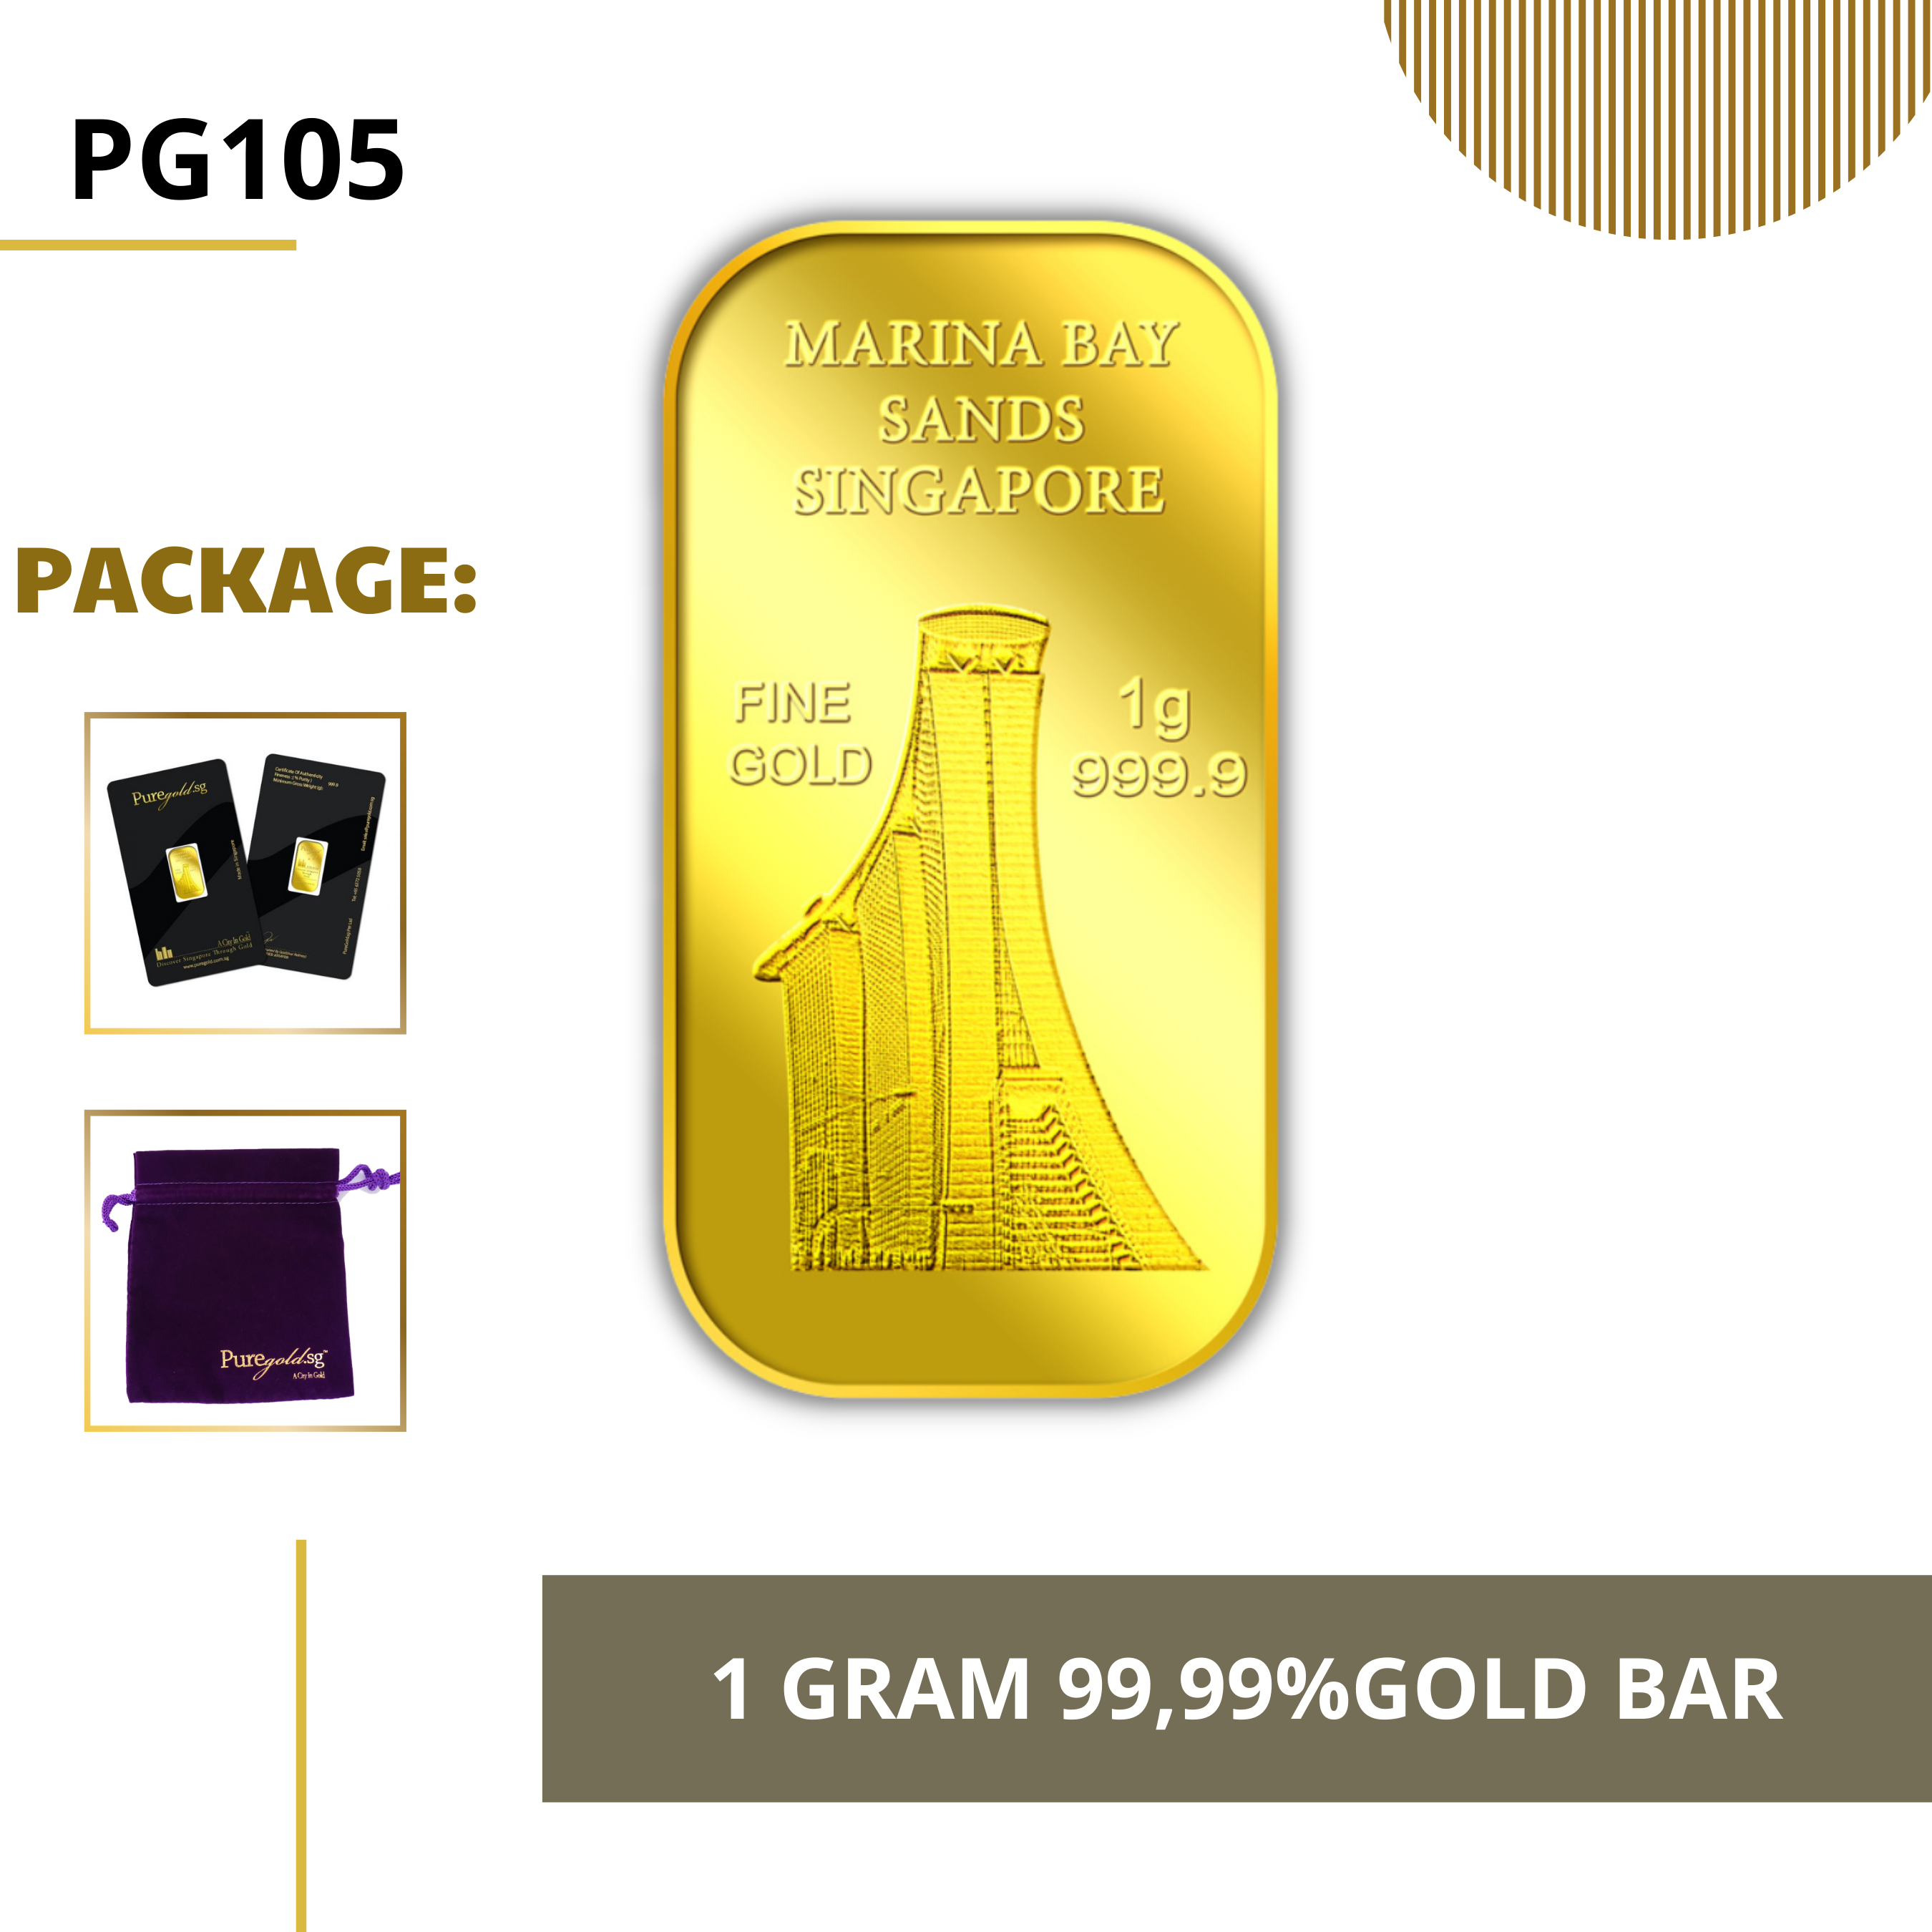 PURE GOLD 99.99% ทองคำแท่ง /1gram Marina Bay Sands gold bar/ ทองคำแท้จากสิงคโปร์ / ทองคำ 1 กรัม / ทอง 99.99% *การันตีทองแท้*